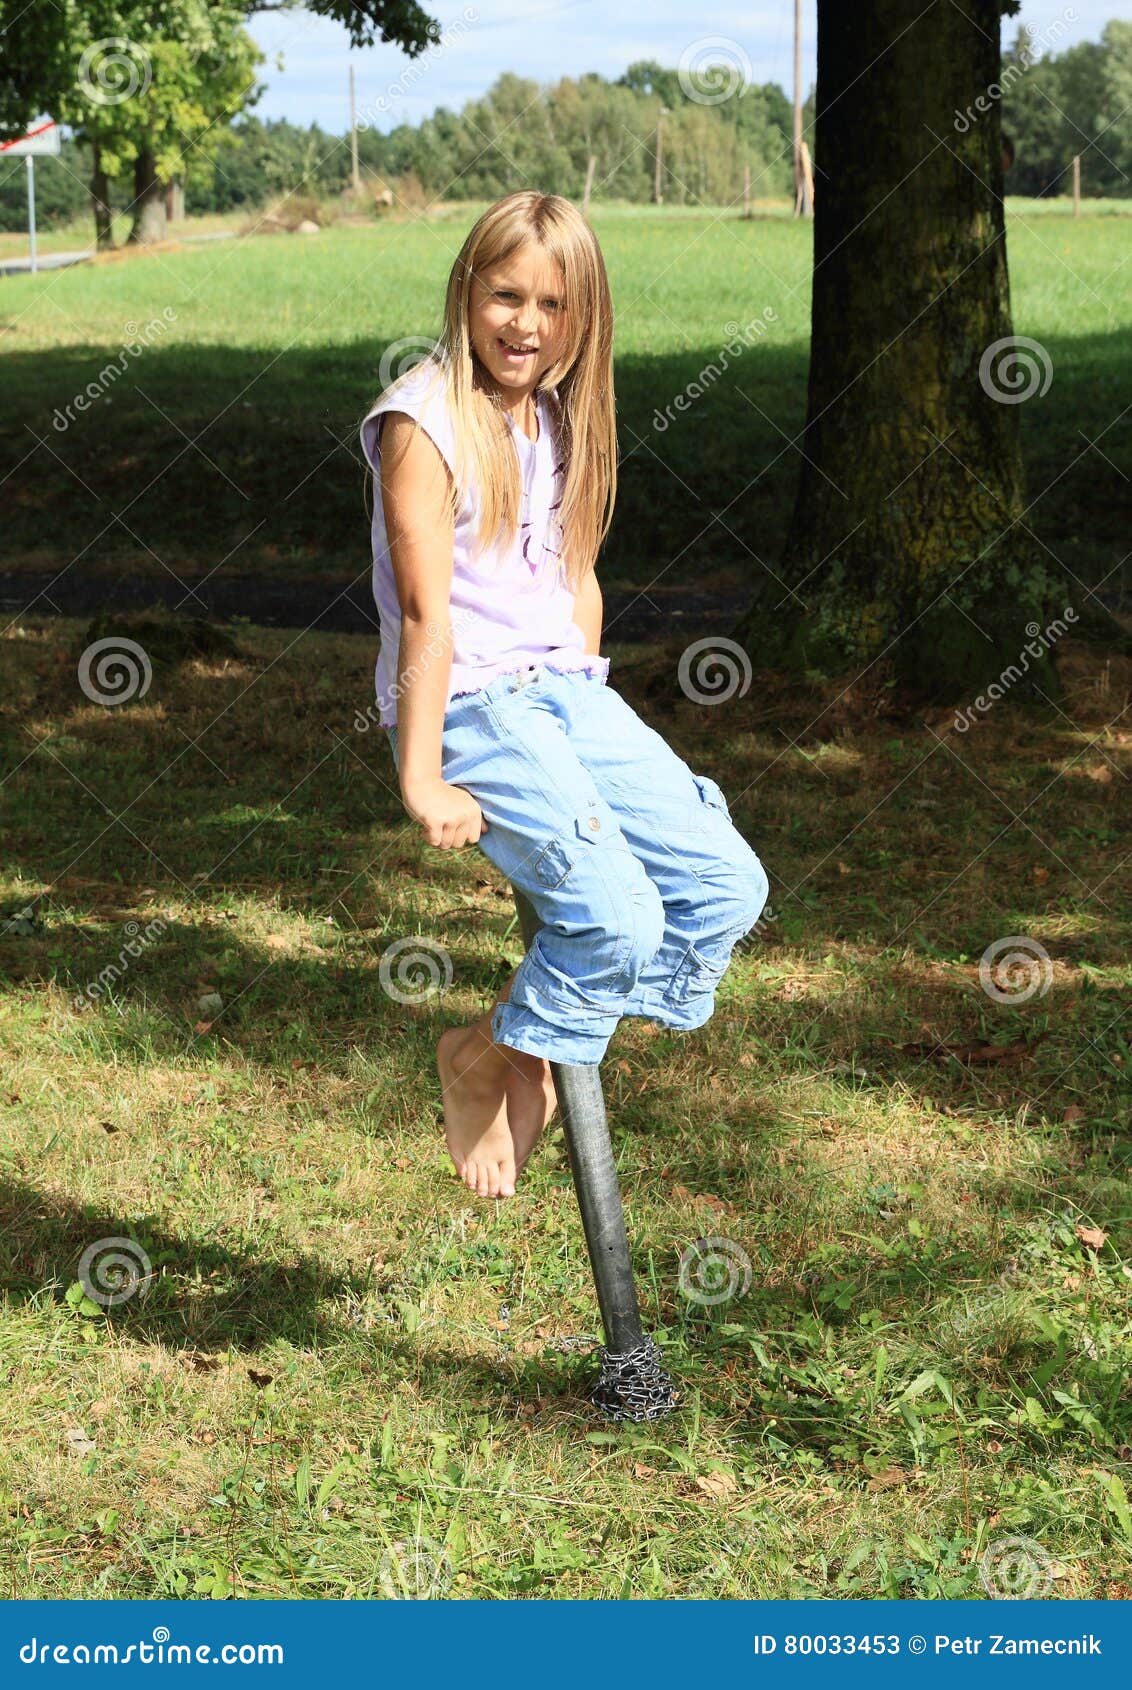 https://thumbs.dreamstime.com/z/girl-sitting-iron-pillar-barefoot-kid-young-smiling-hairy-blond-metal-meadow-keeping-balance-80033453.jpg